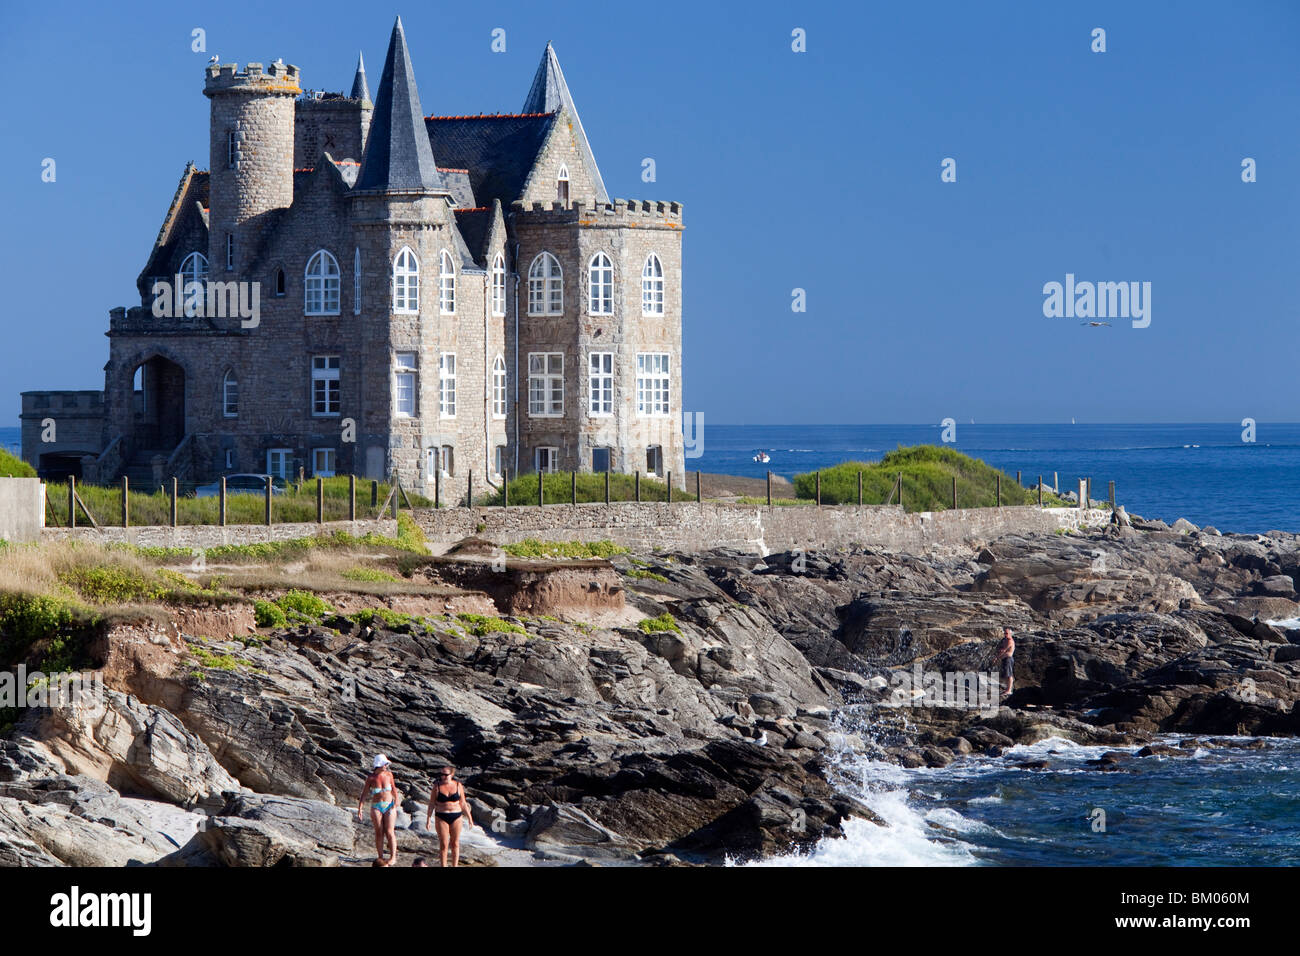 Turpault Mansion, Cote Sauvage, Quiberon, departament de Morbihan, Brittany, France Stock Photo